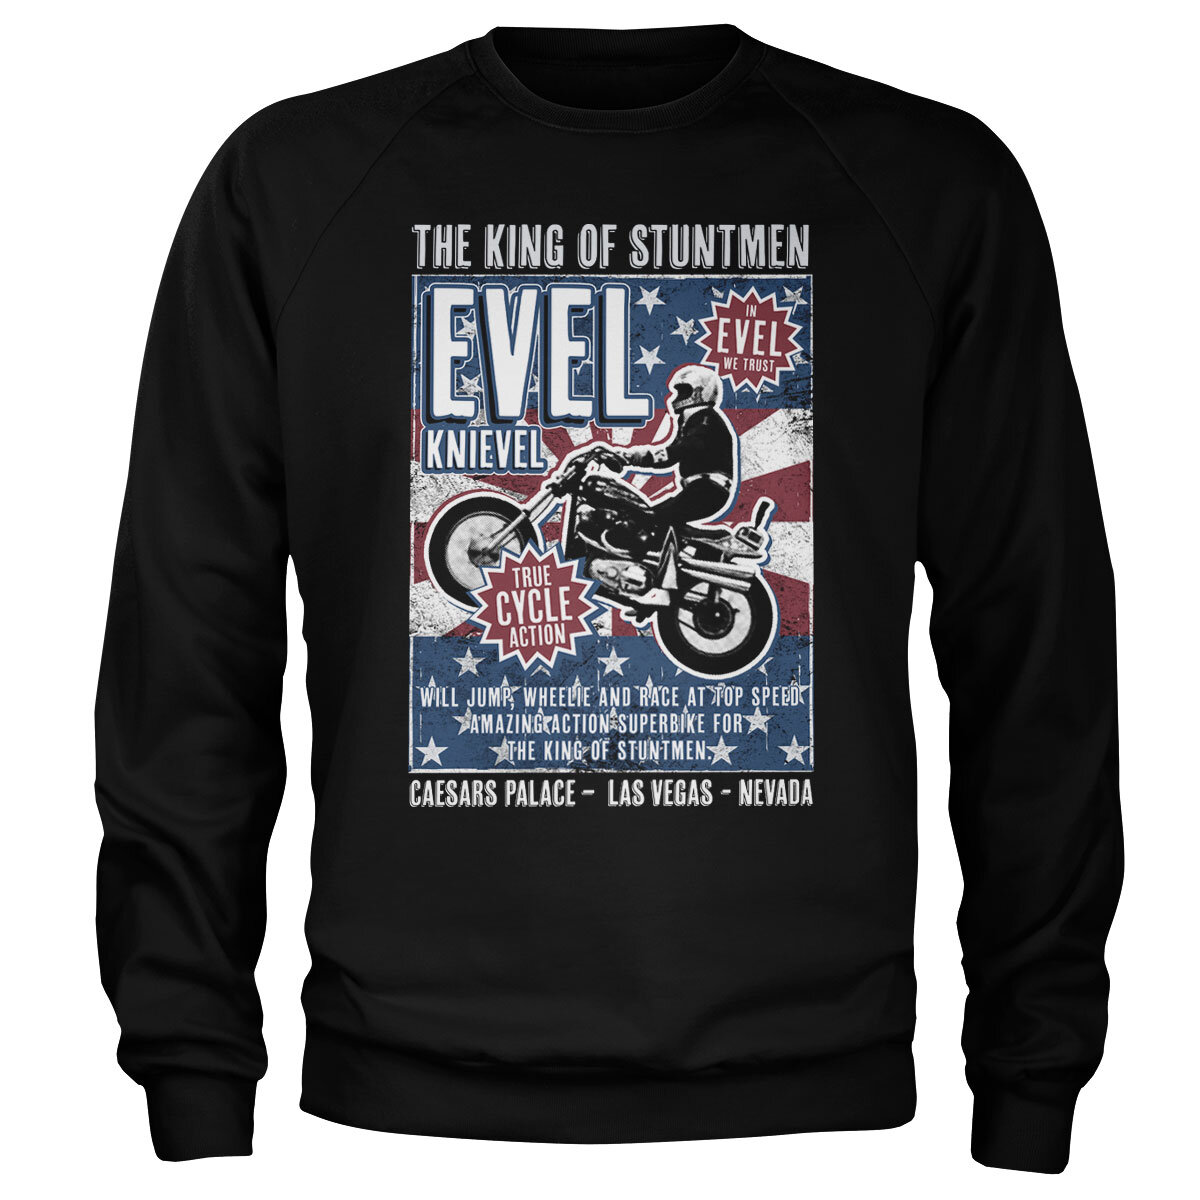 Evel Knievel Poster Sweatshirt